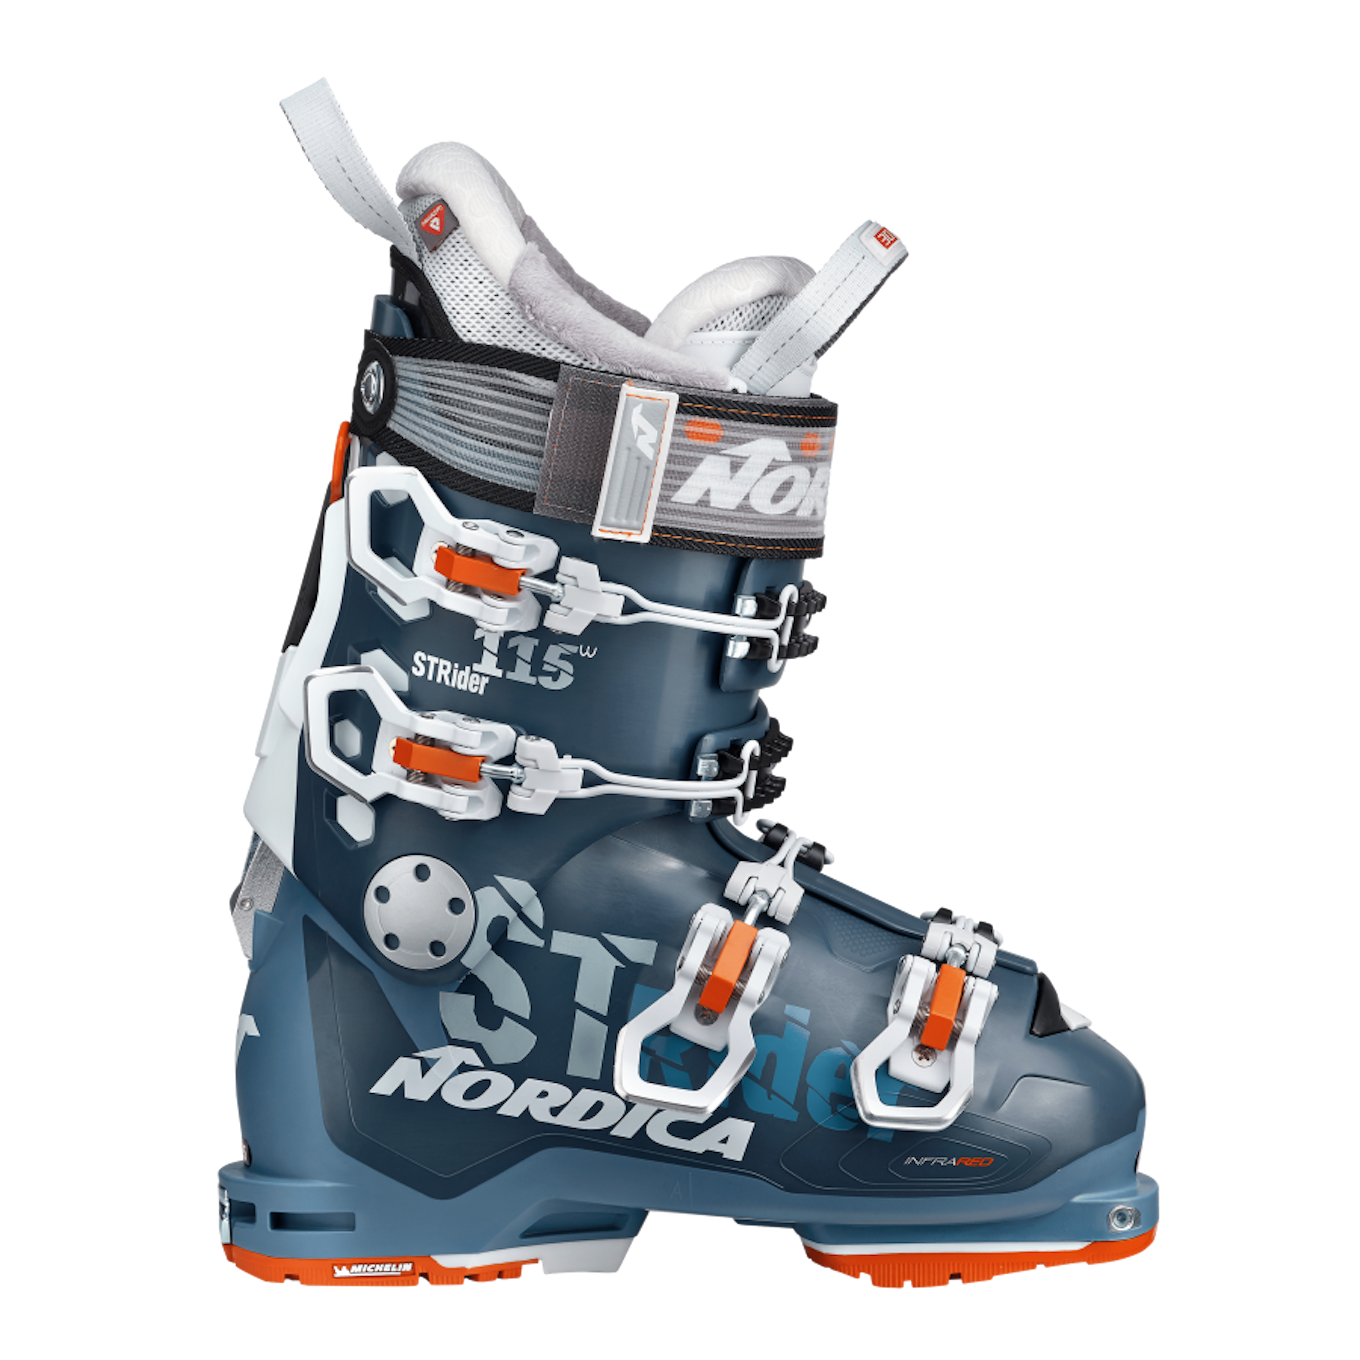 Nordica Strider 115 Women's Ski Boot Review